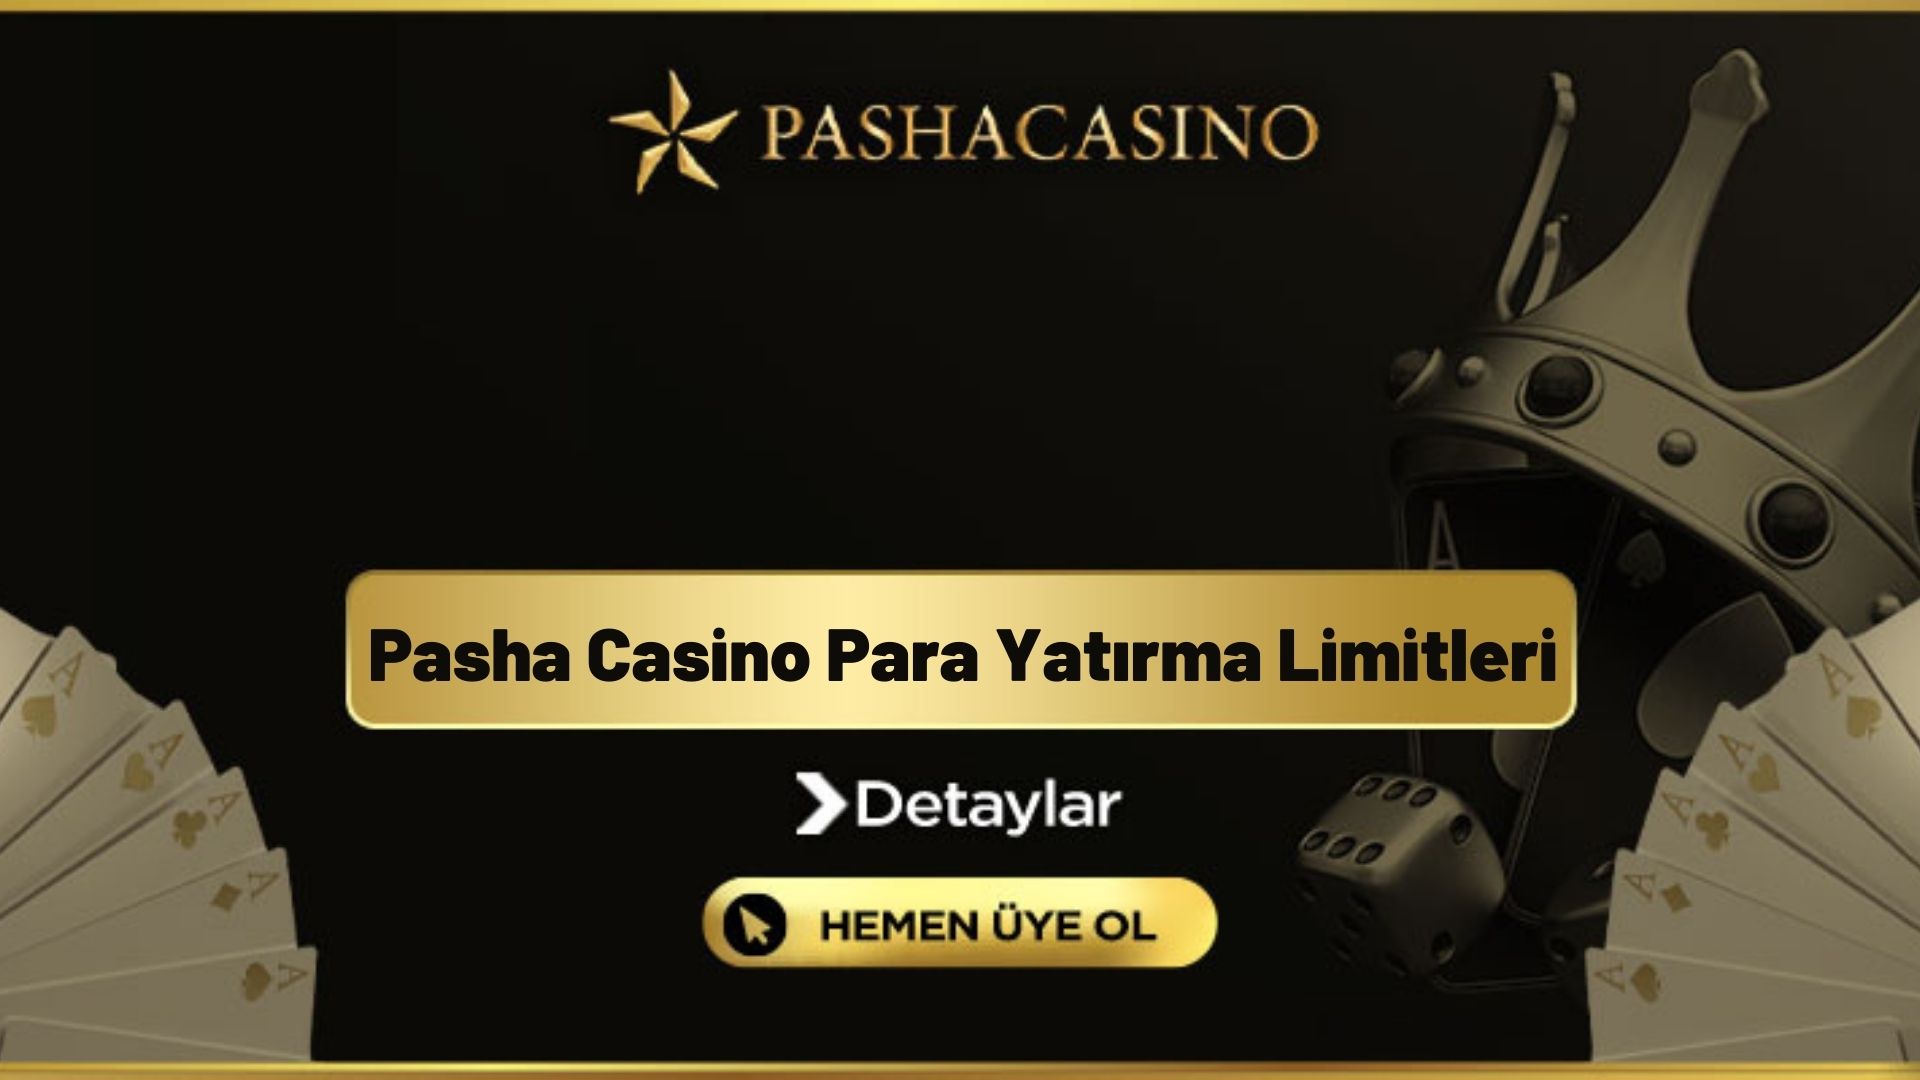 Pasha Casino Para Yatırma Limitleri